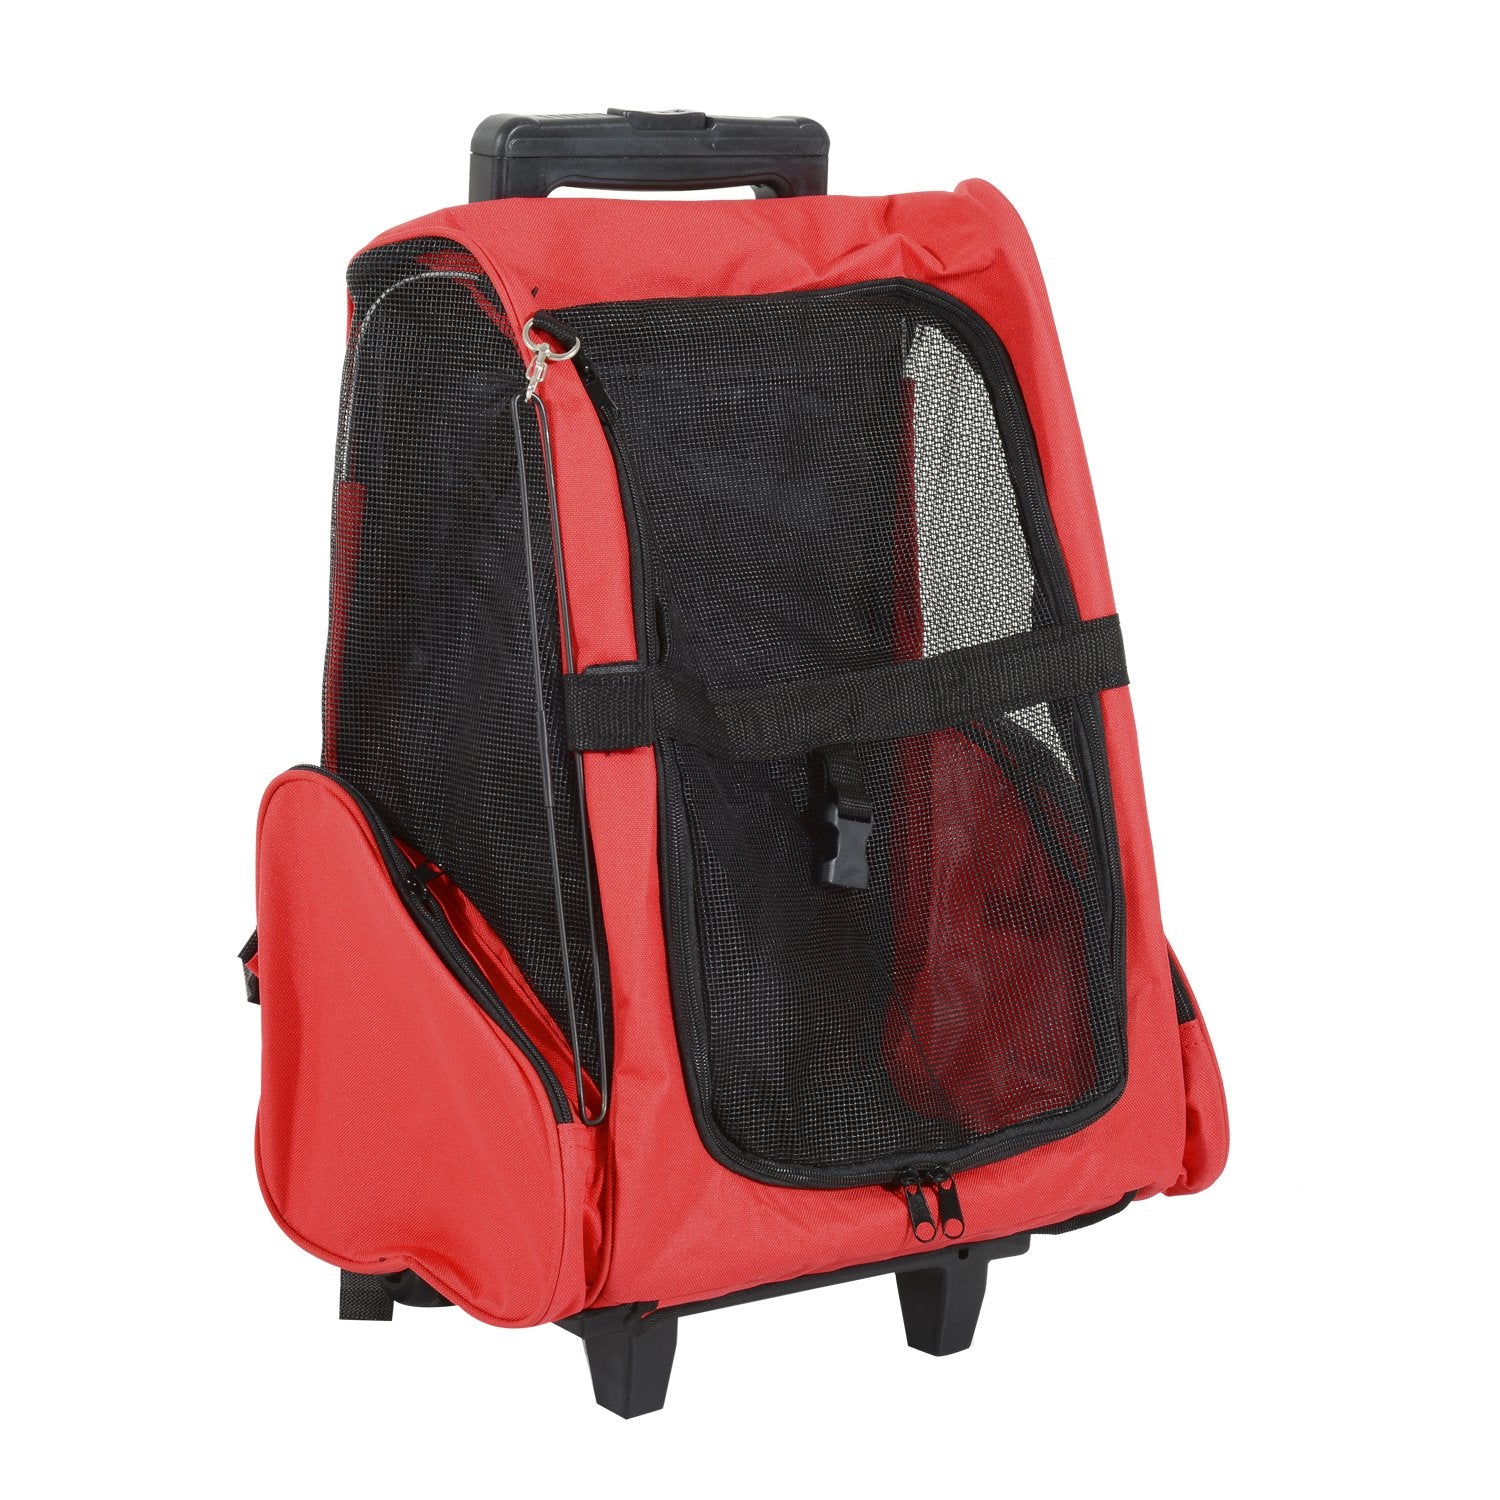 
  
  PawHut-caja de equipaje para mascotas, mochila para perros y gatos, rueda rodante
  
